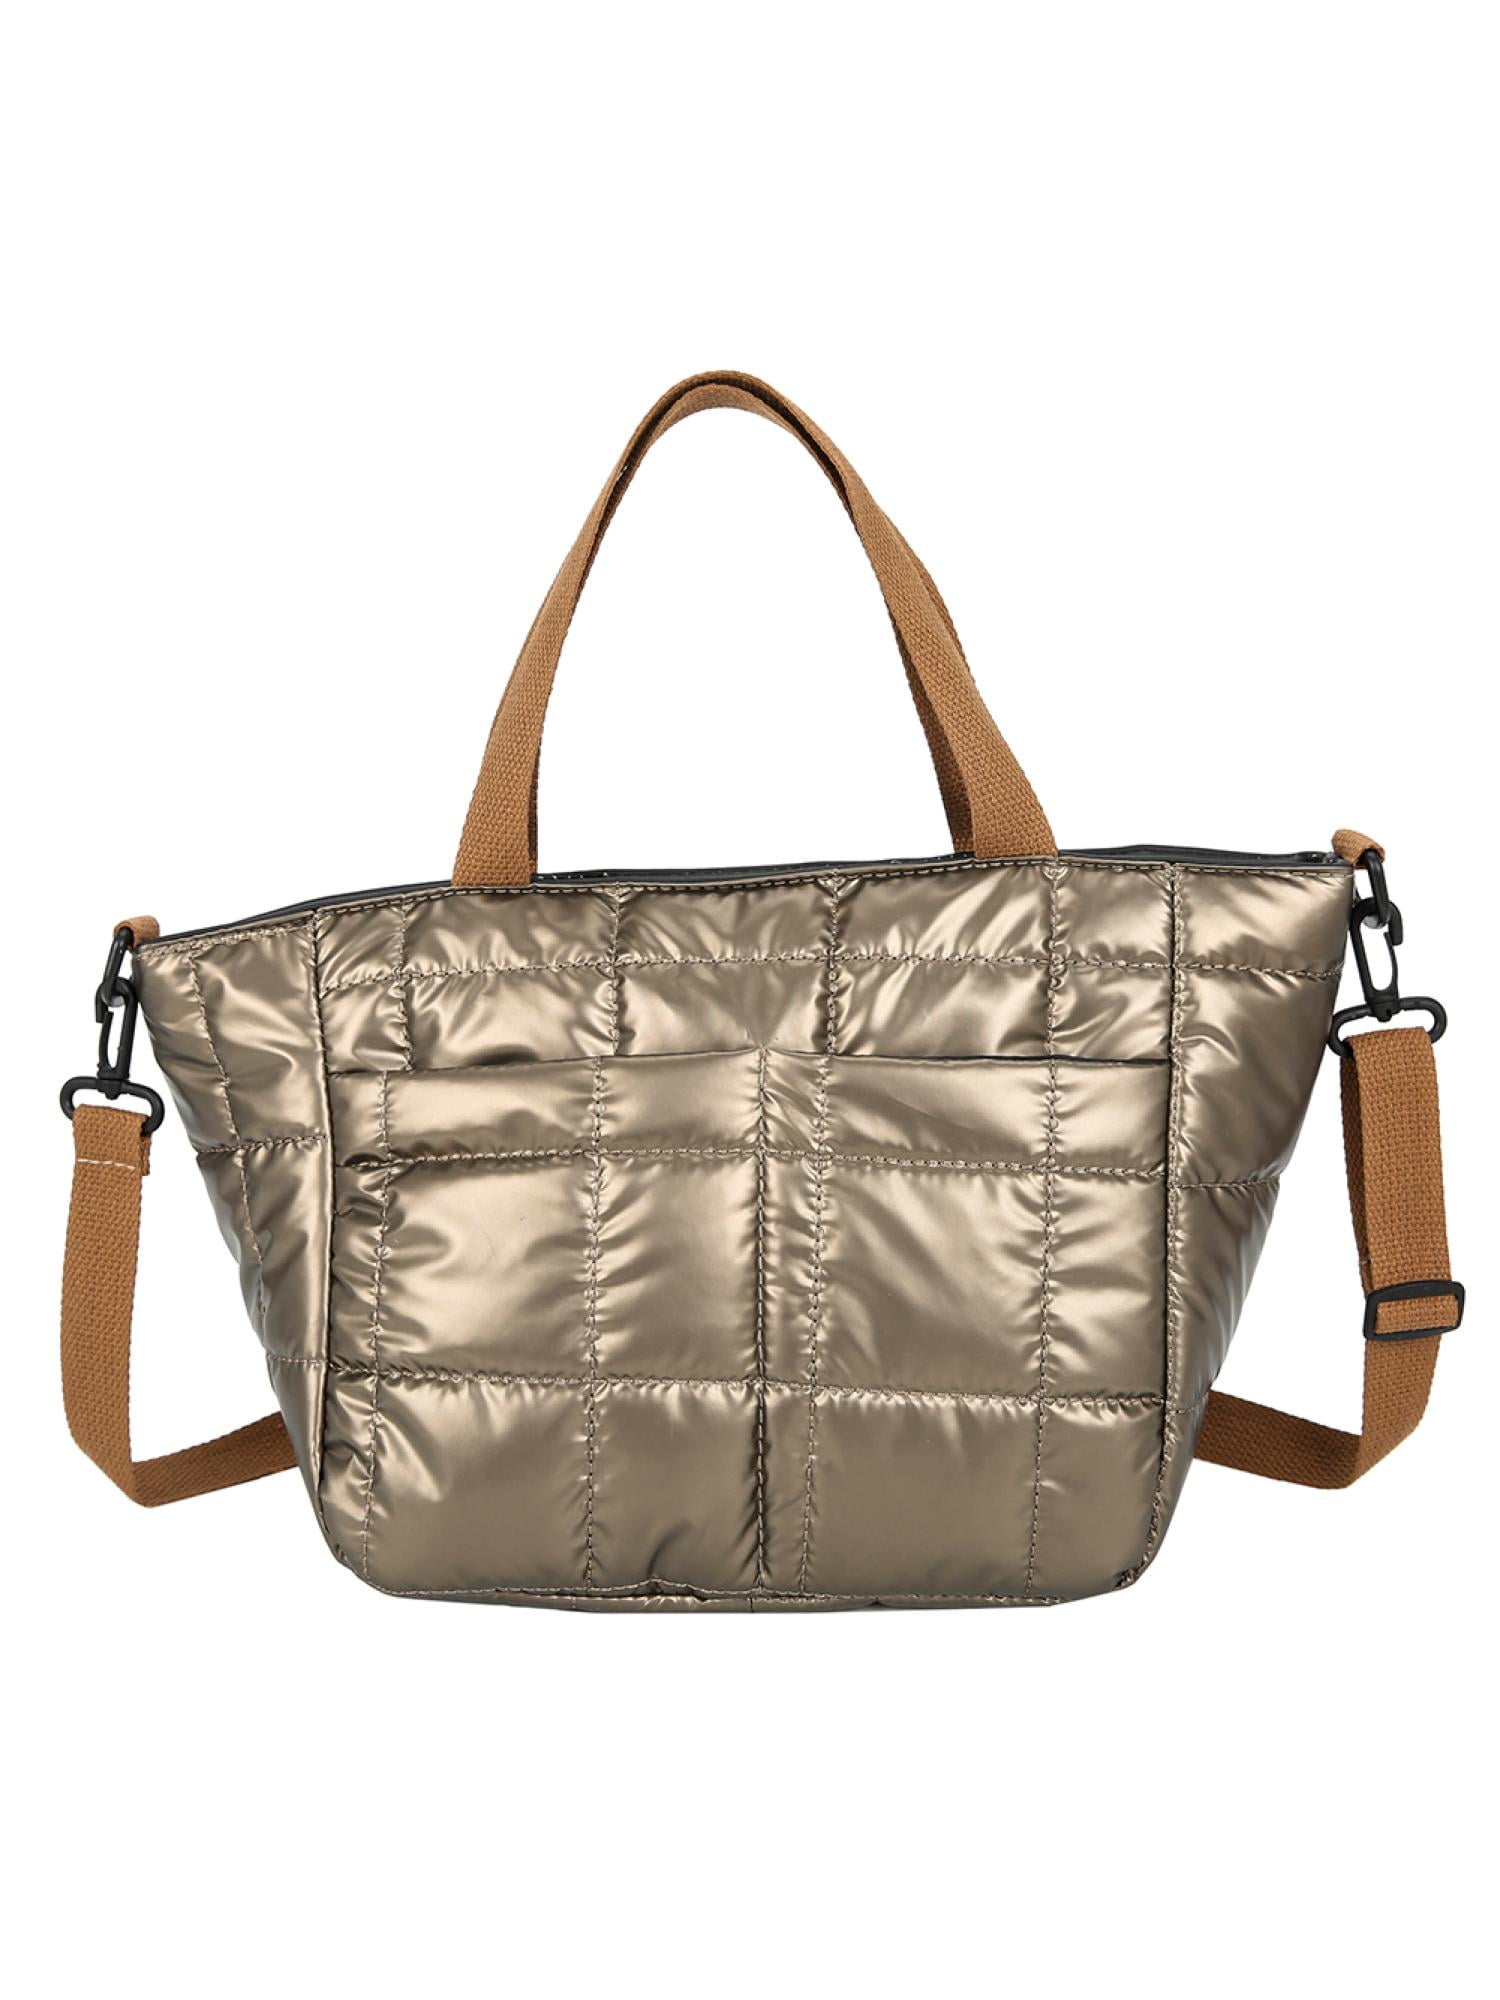 Bxingsftys Fashion Quilted Lattice Shoulder Bags Women Nylon Crossbody Bag  Handbag 